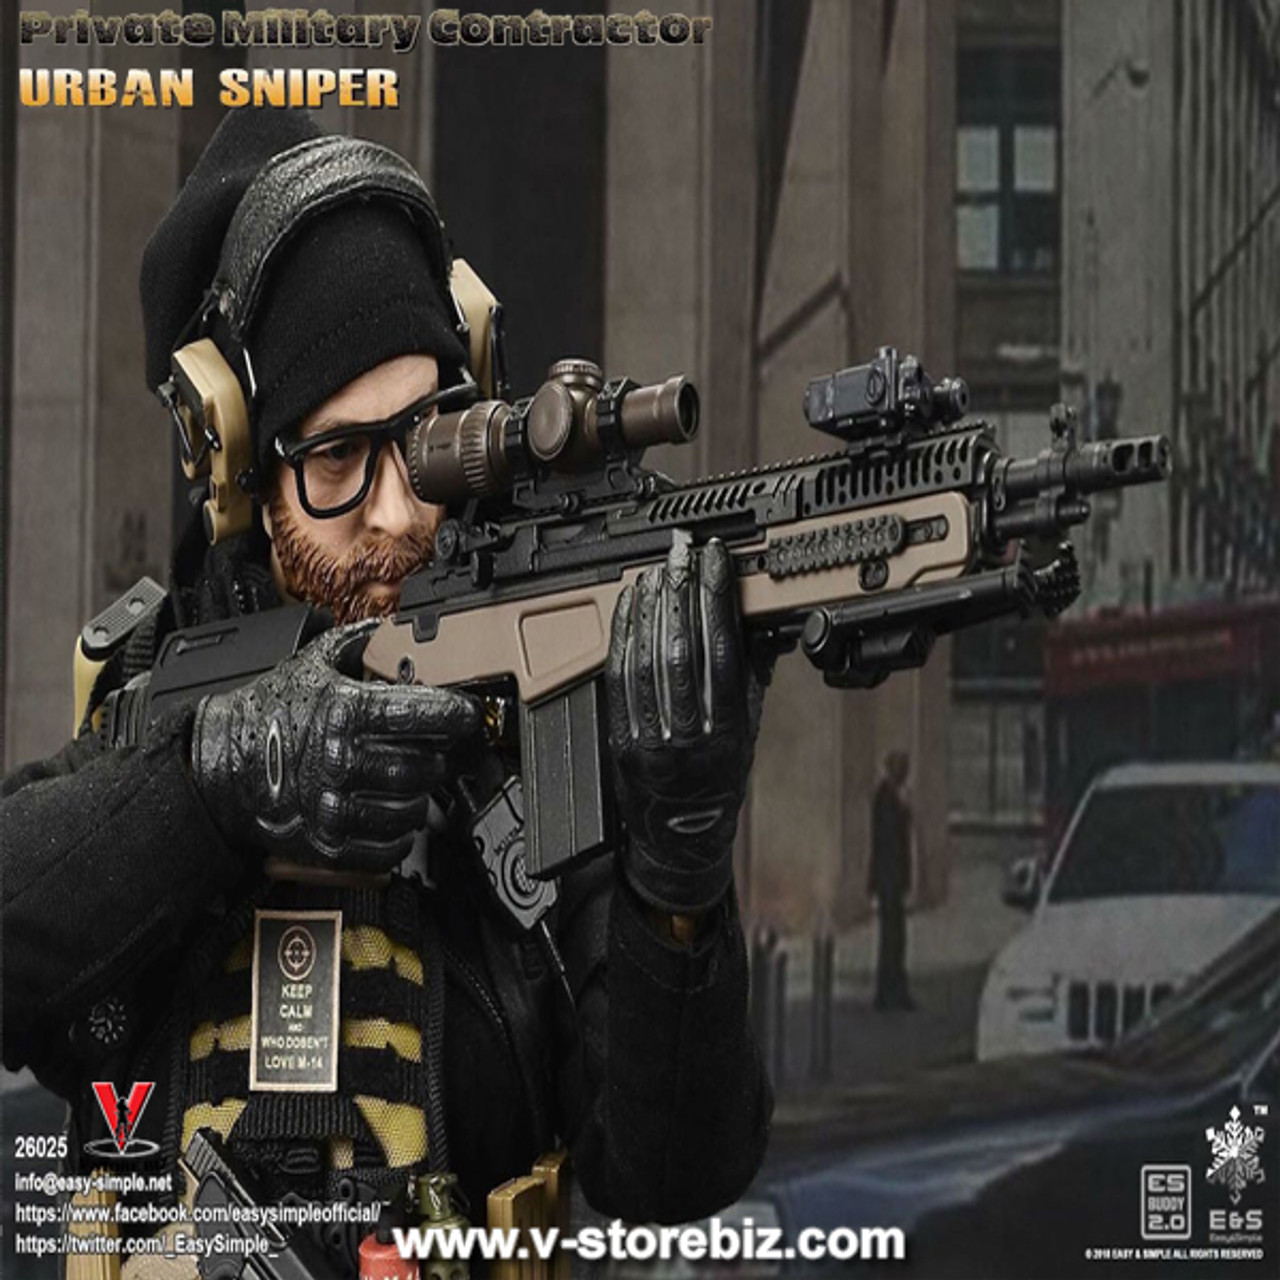 EandS 26025 PMC Urban Sniper